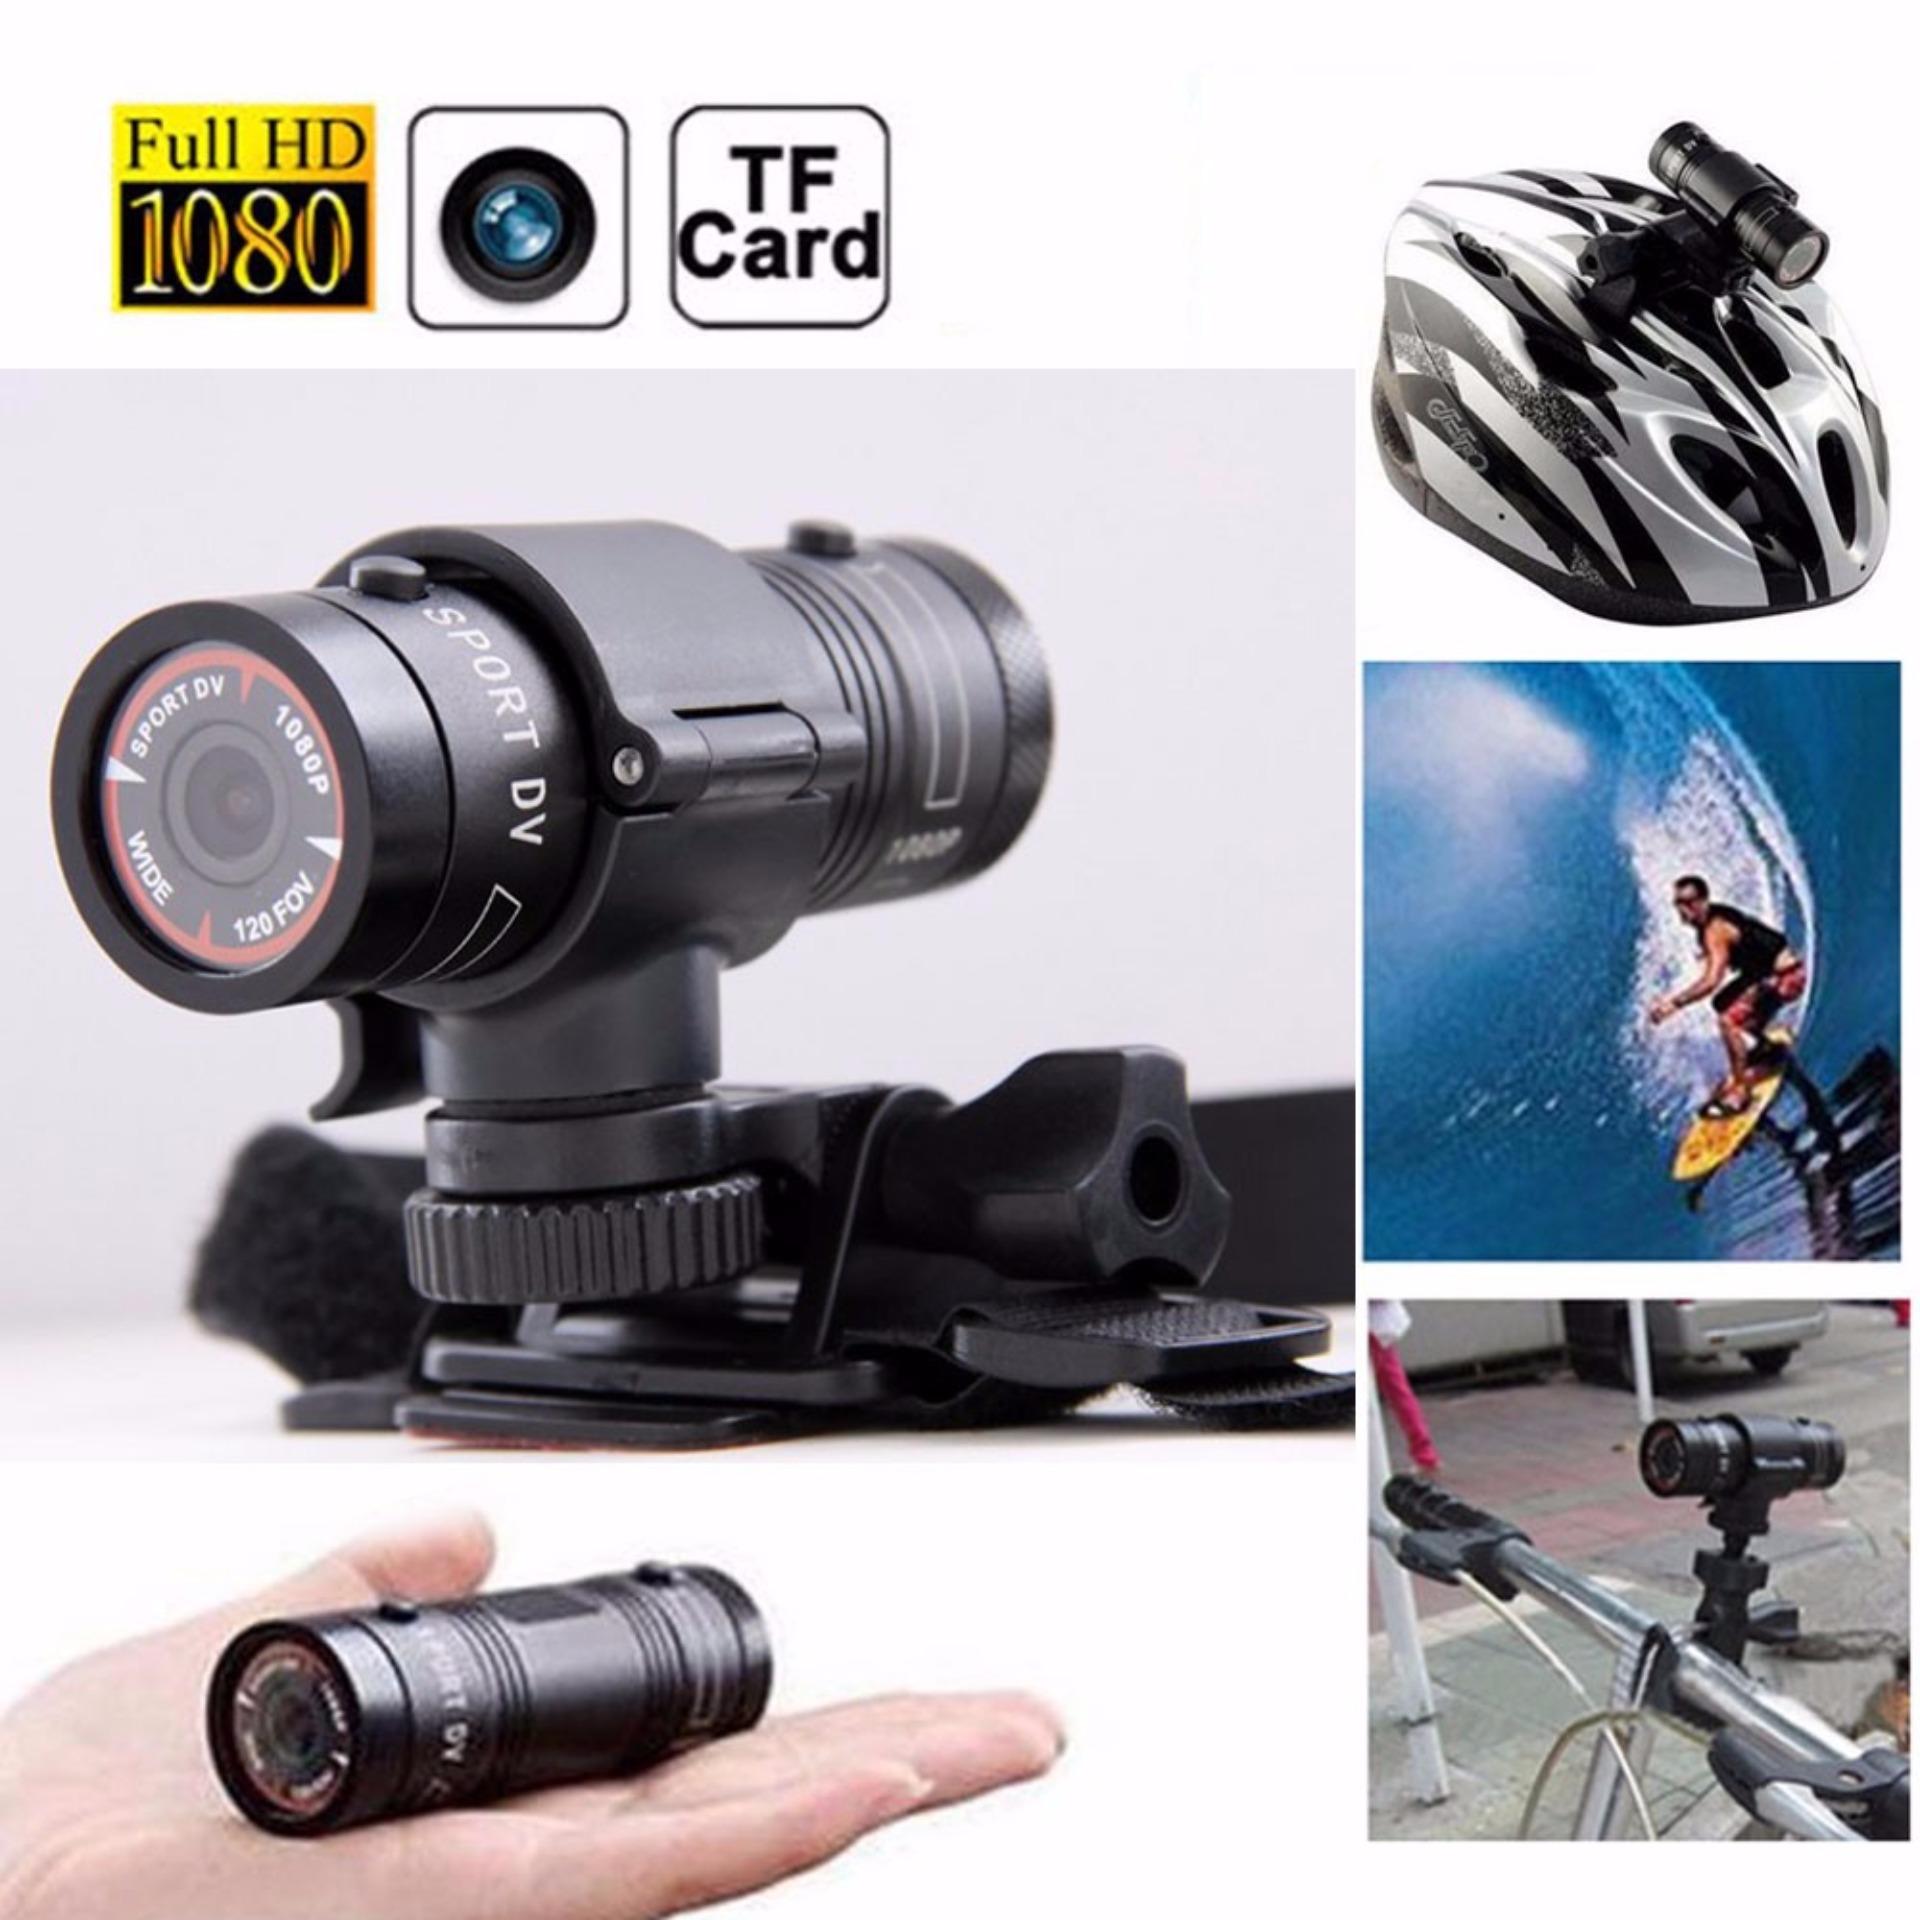 Sport DV Camera 1080P Waterproof Bike Car Bicycle Outdoor Sports DV Video Camera Action Mini Portable Full HD